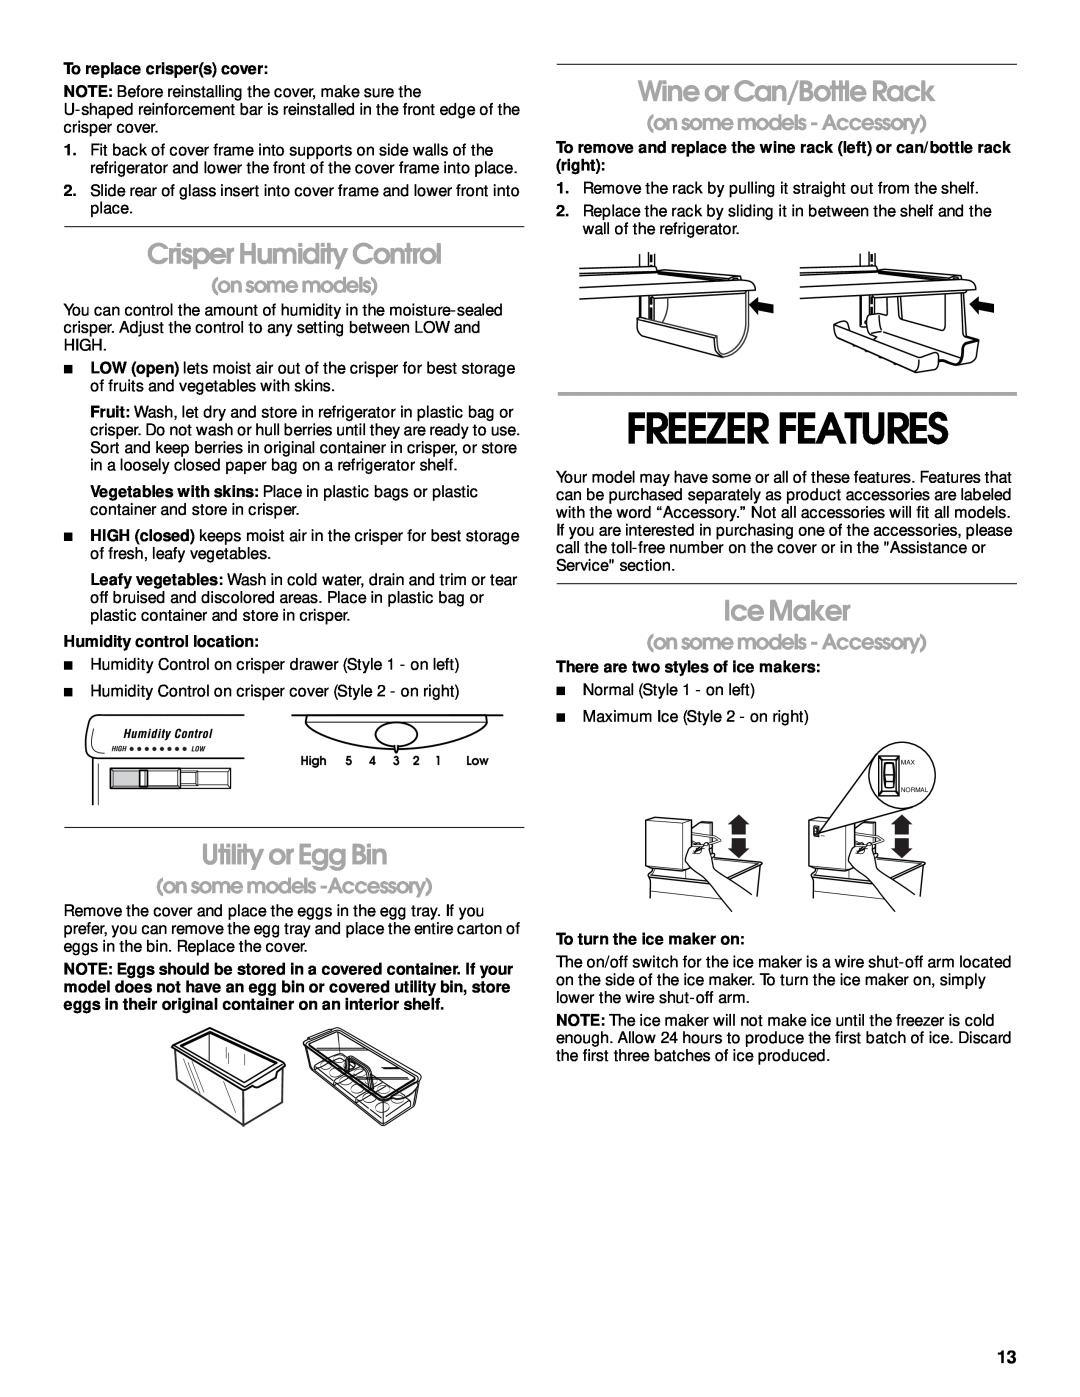 Crosley 2212430 manual Freezer Features, Crisper Humidity Control, Wine or Can/Bottle Rack, Ice Maker, Utility or Egg Bin 